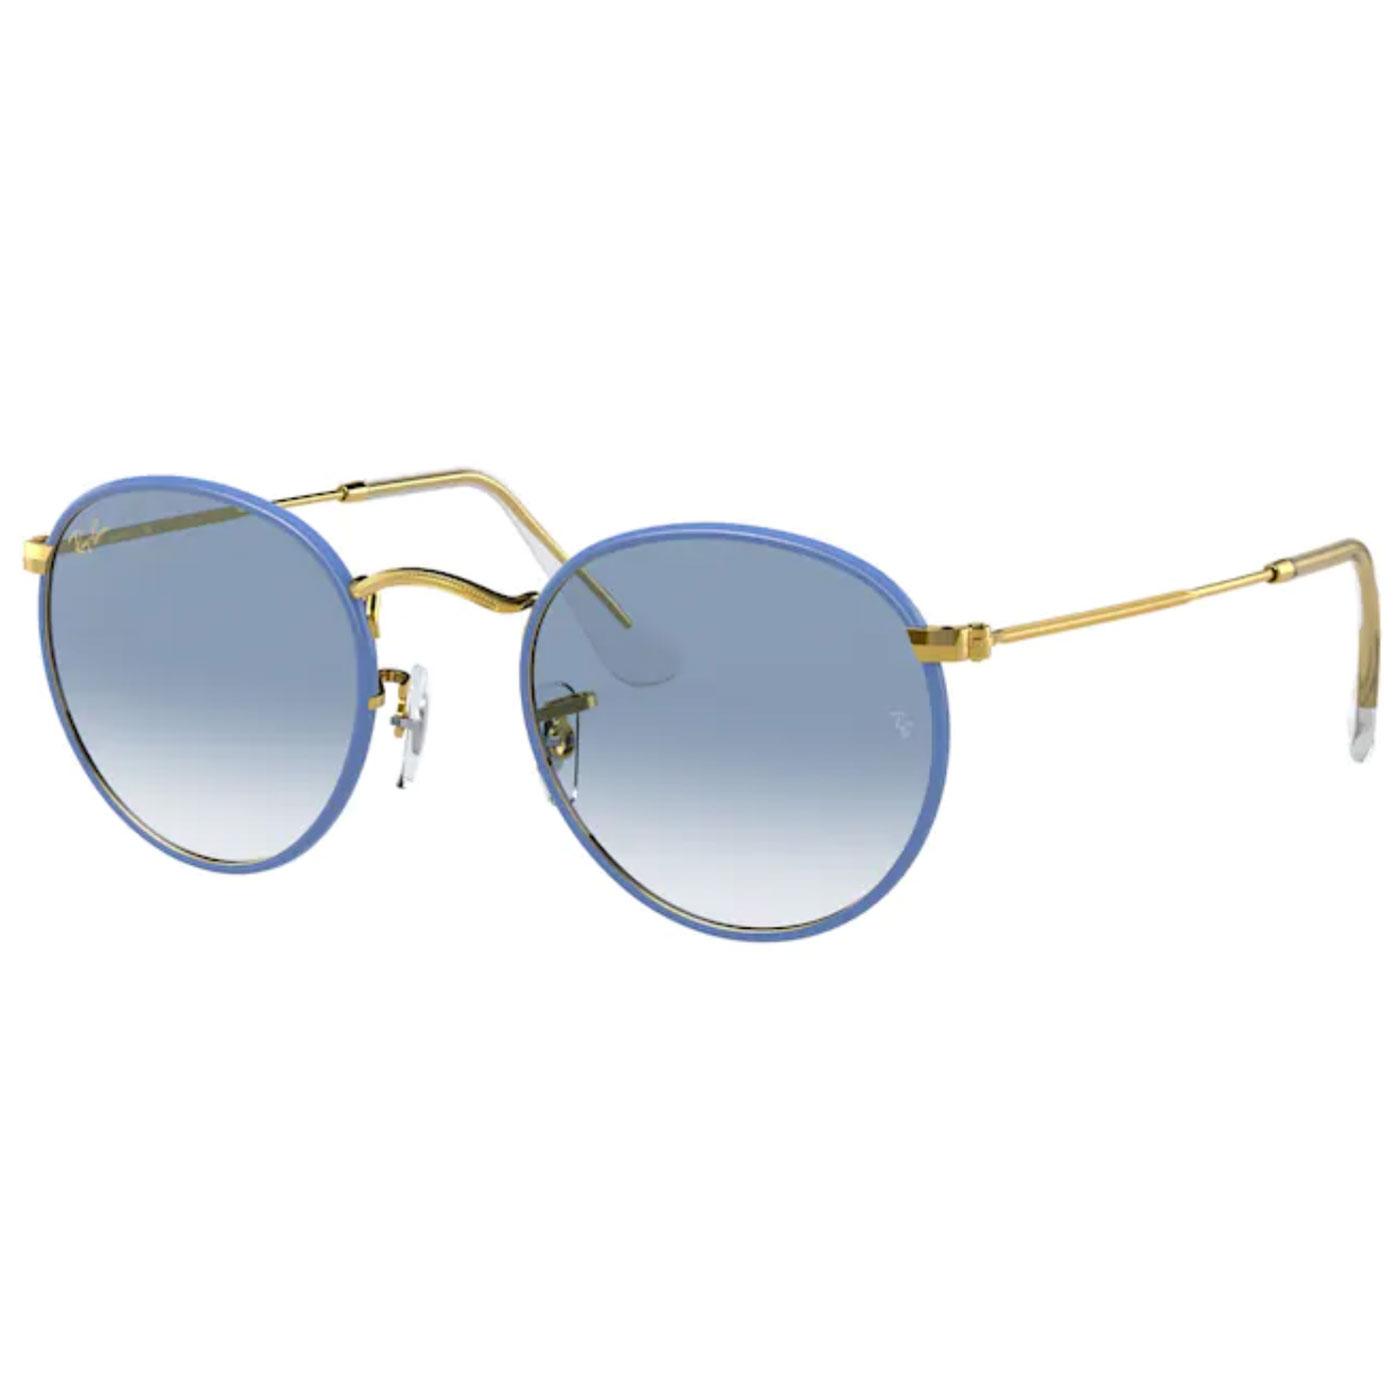 RAY-BAN Round Full Colour Retro 60s Sunglasses in Light Blue